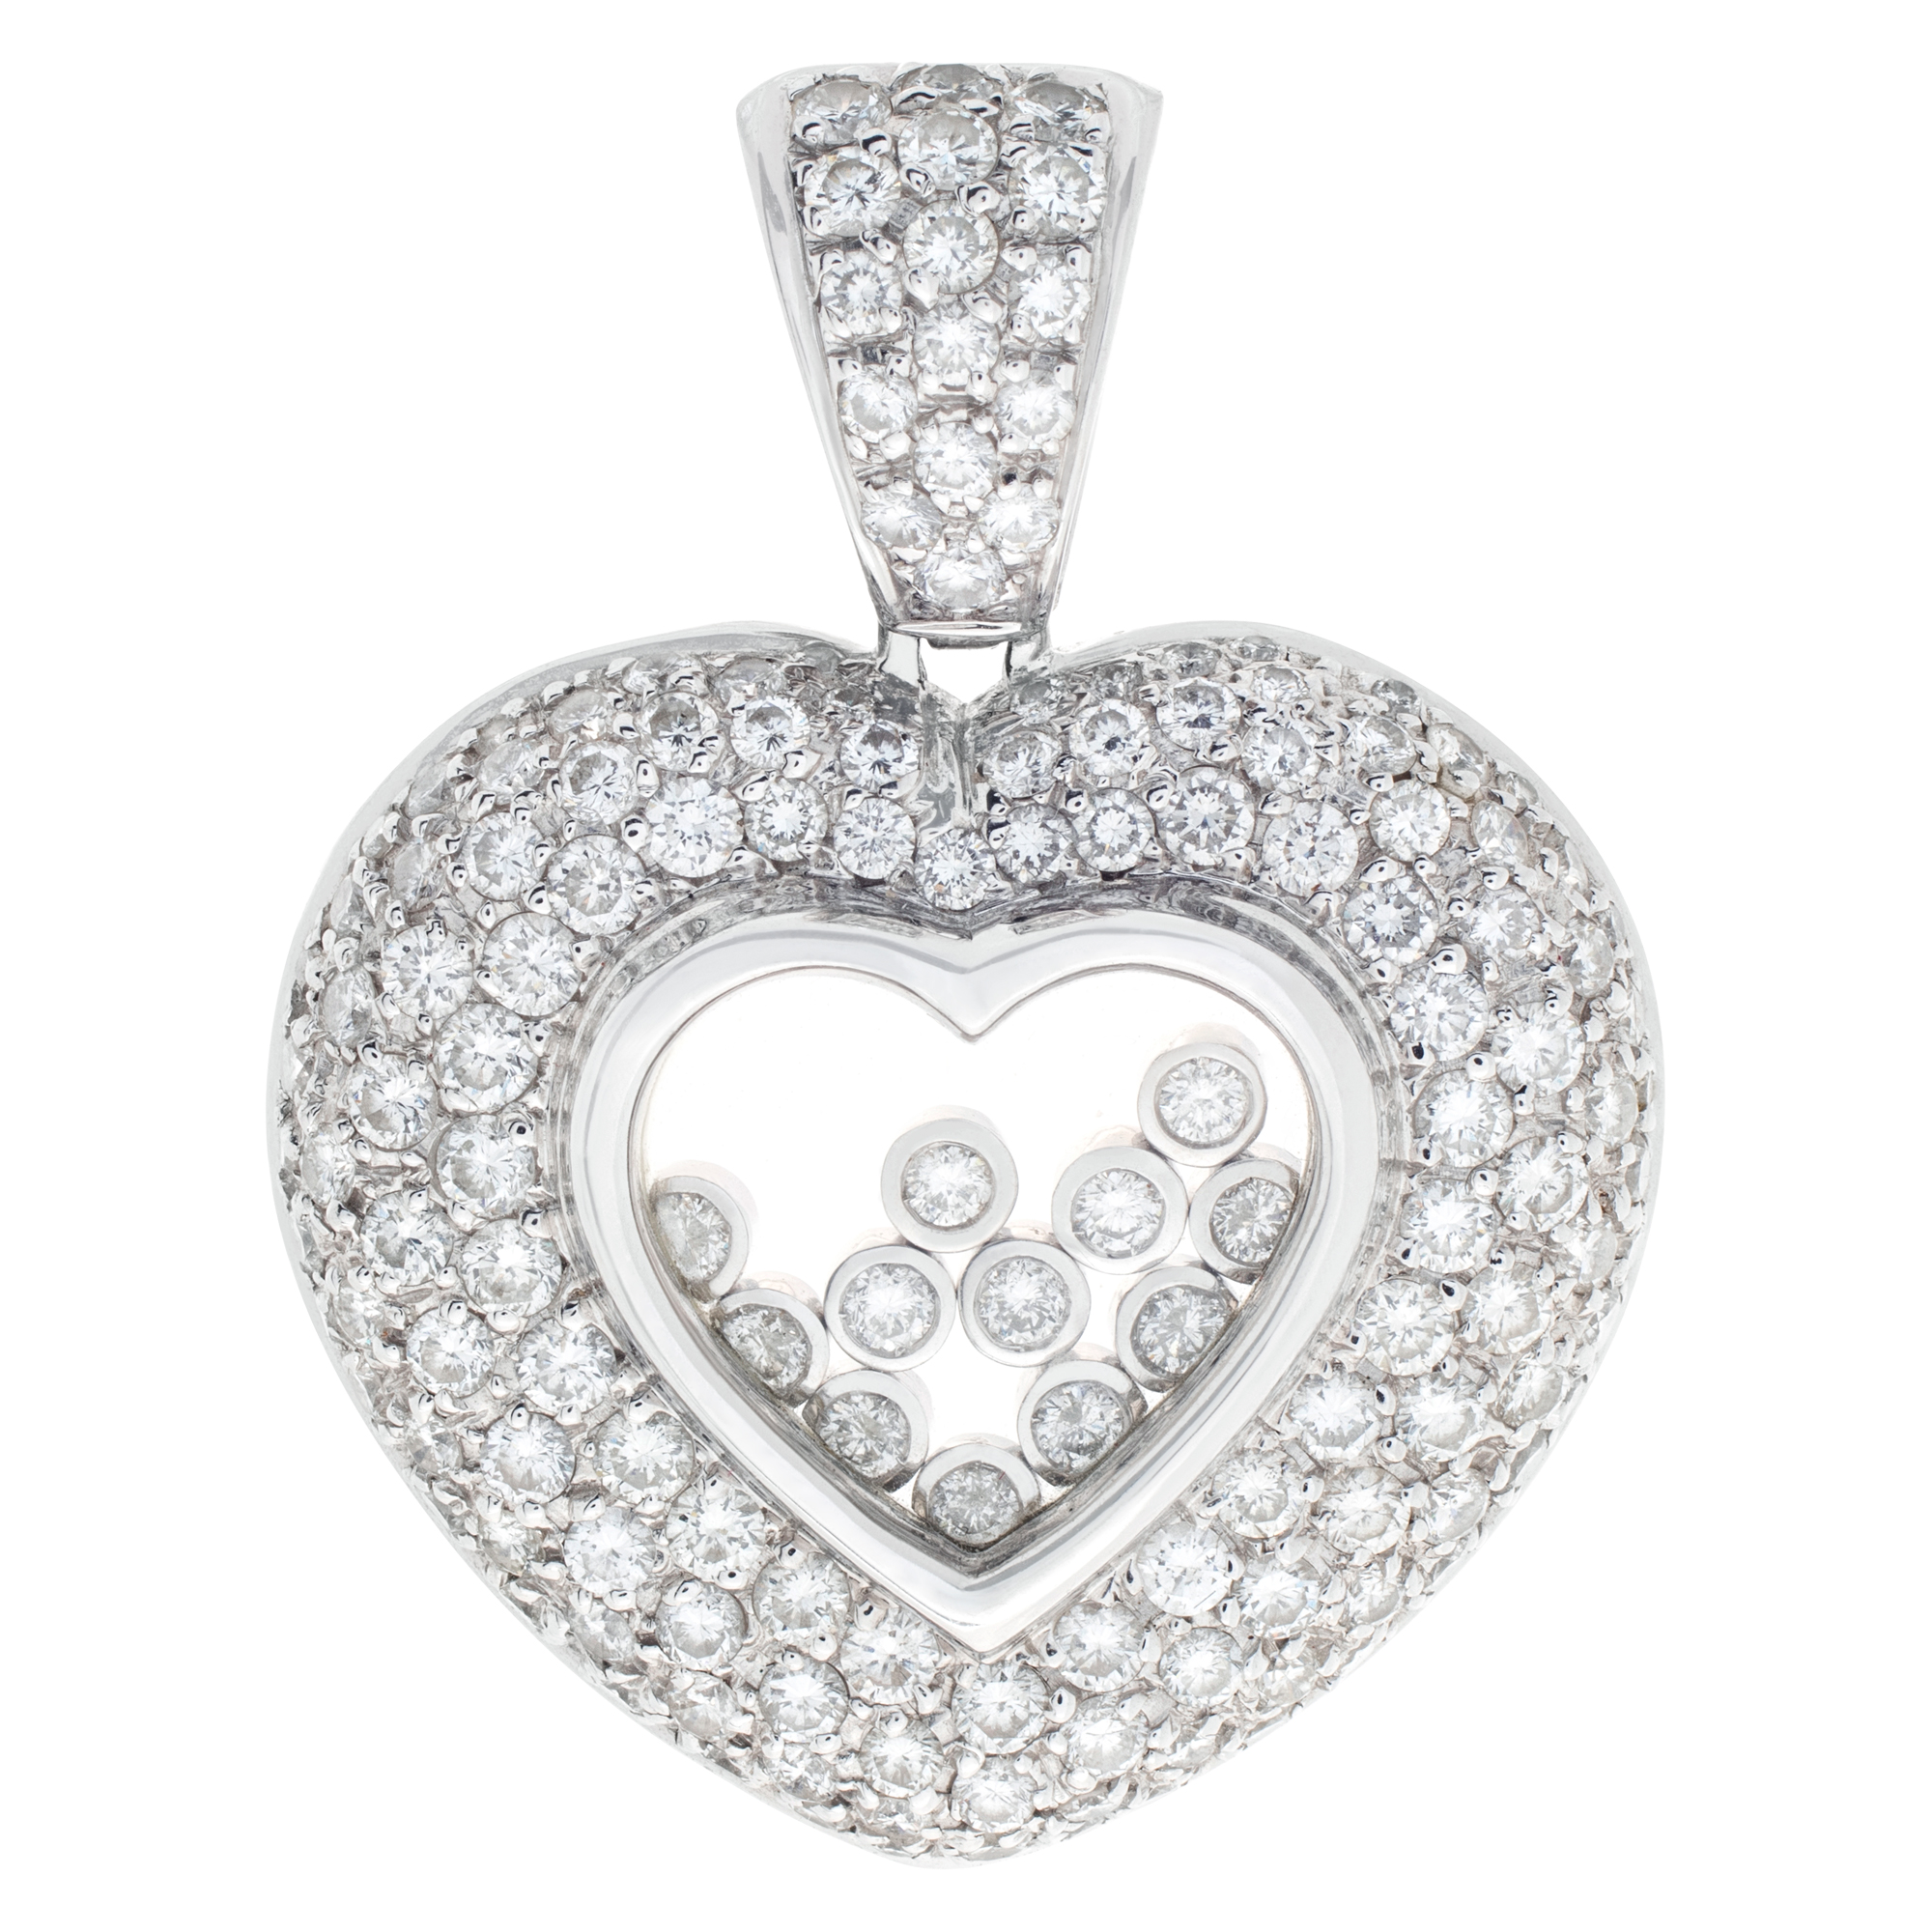 Bold heart shaped diamond pendant with 12 floating diamonds